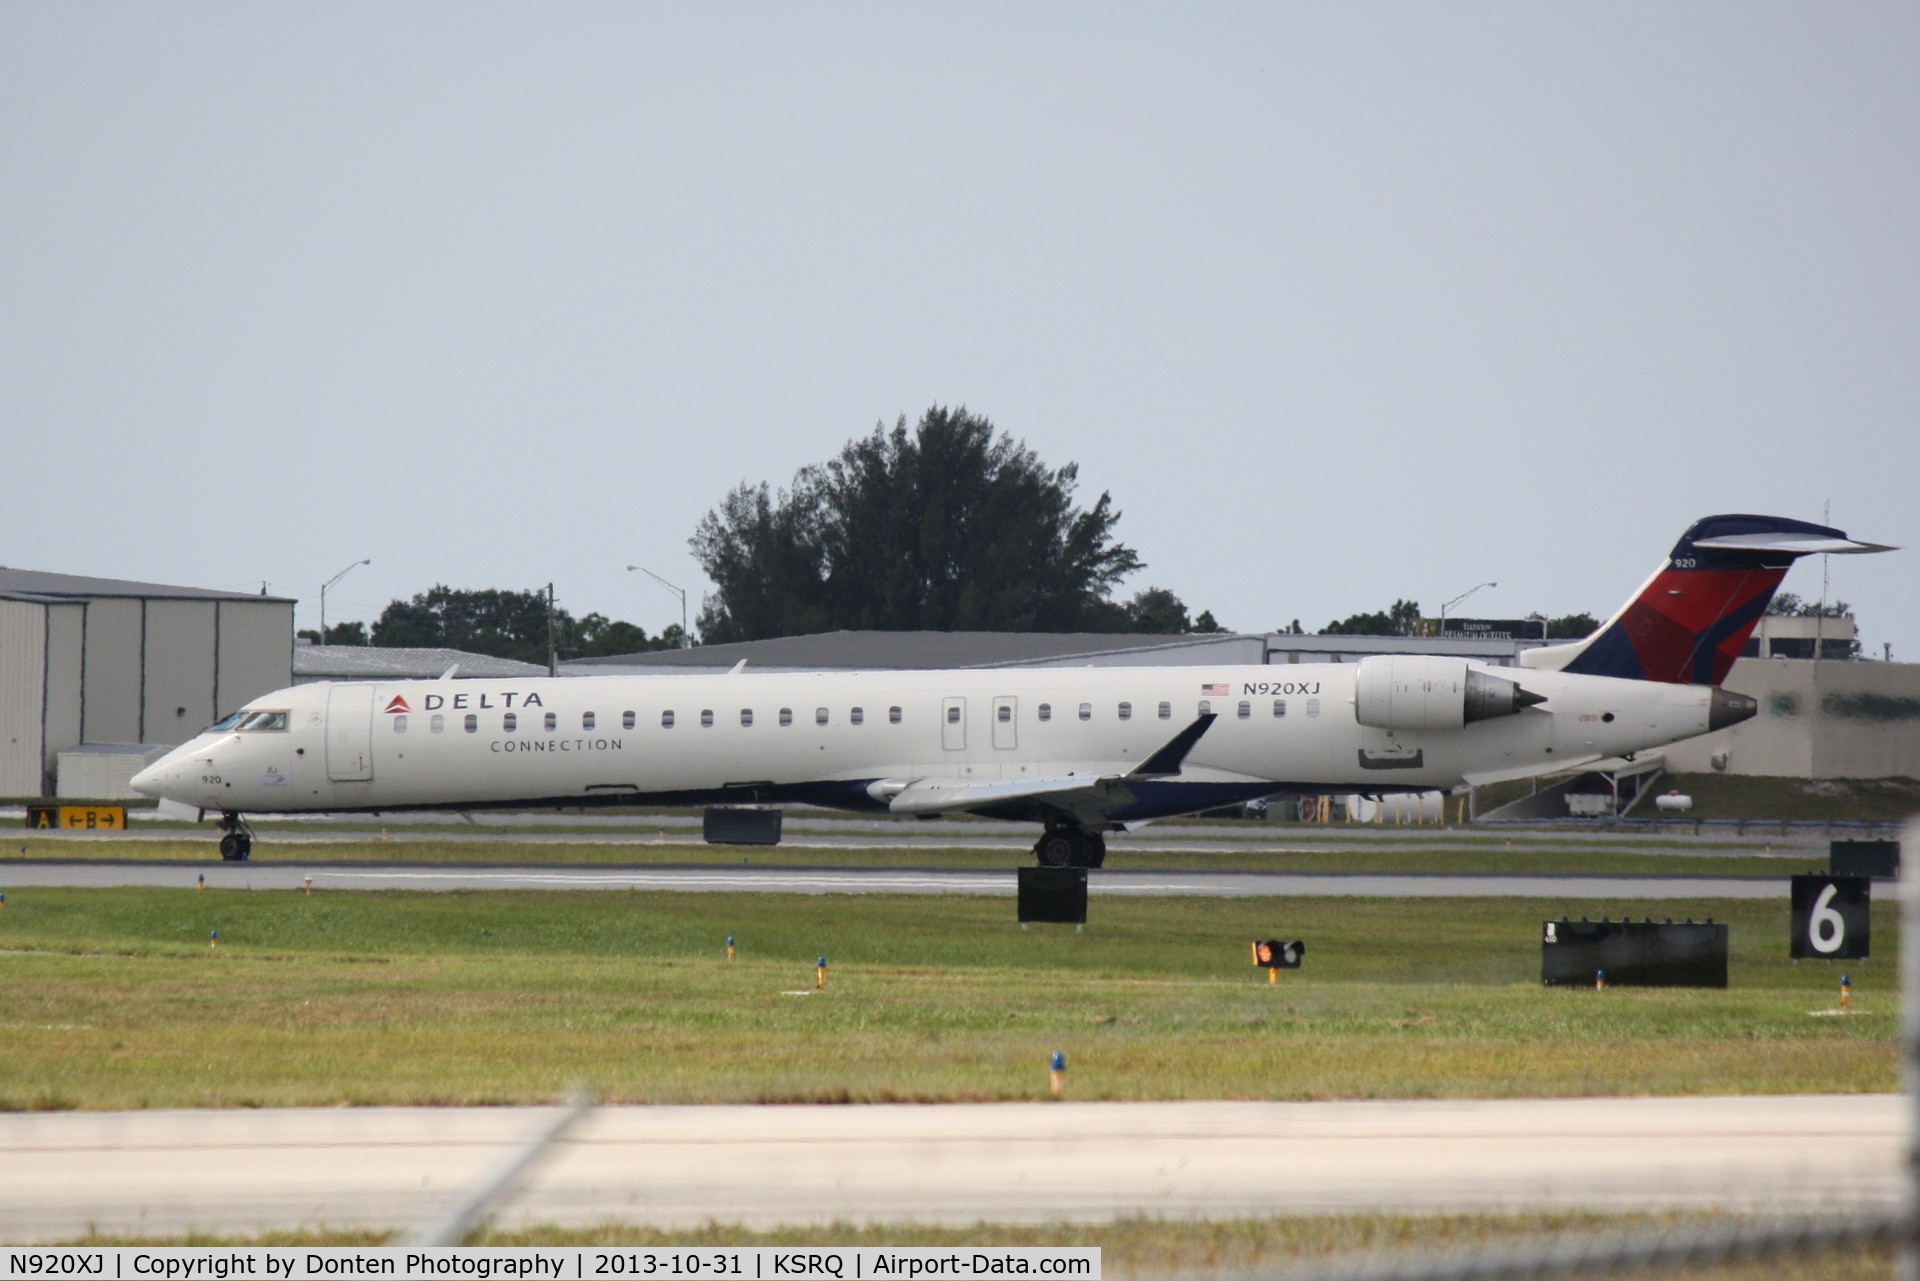 N920XJ, 2008 Bombardier CRJ-900ER (CL-600-2D24) C/N 15167, Delta Flight 3493 operated by Endeavor Air (N920XJ) arrives at Sarasota-Bradenton International Airport following a flight from Laguardia Airport